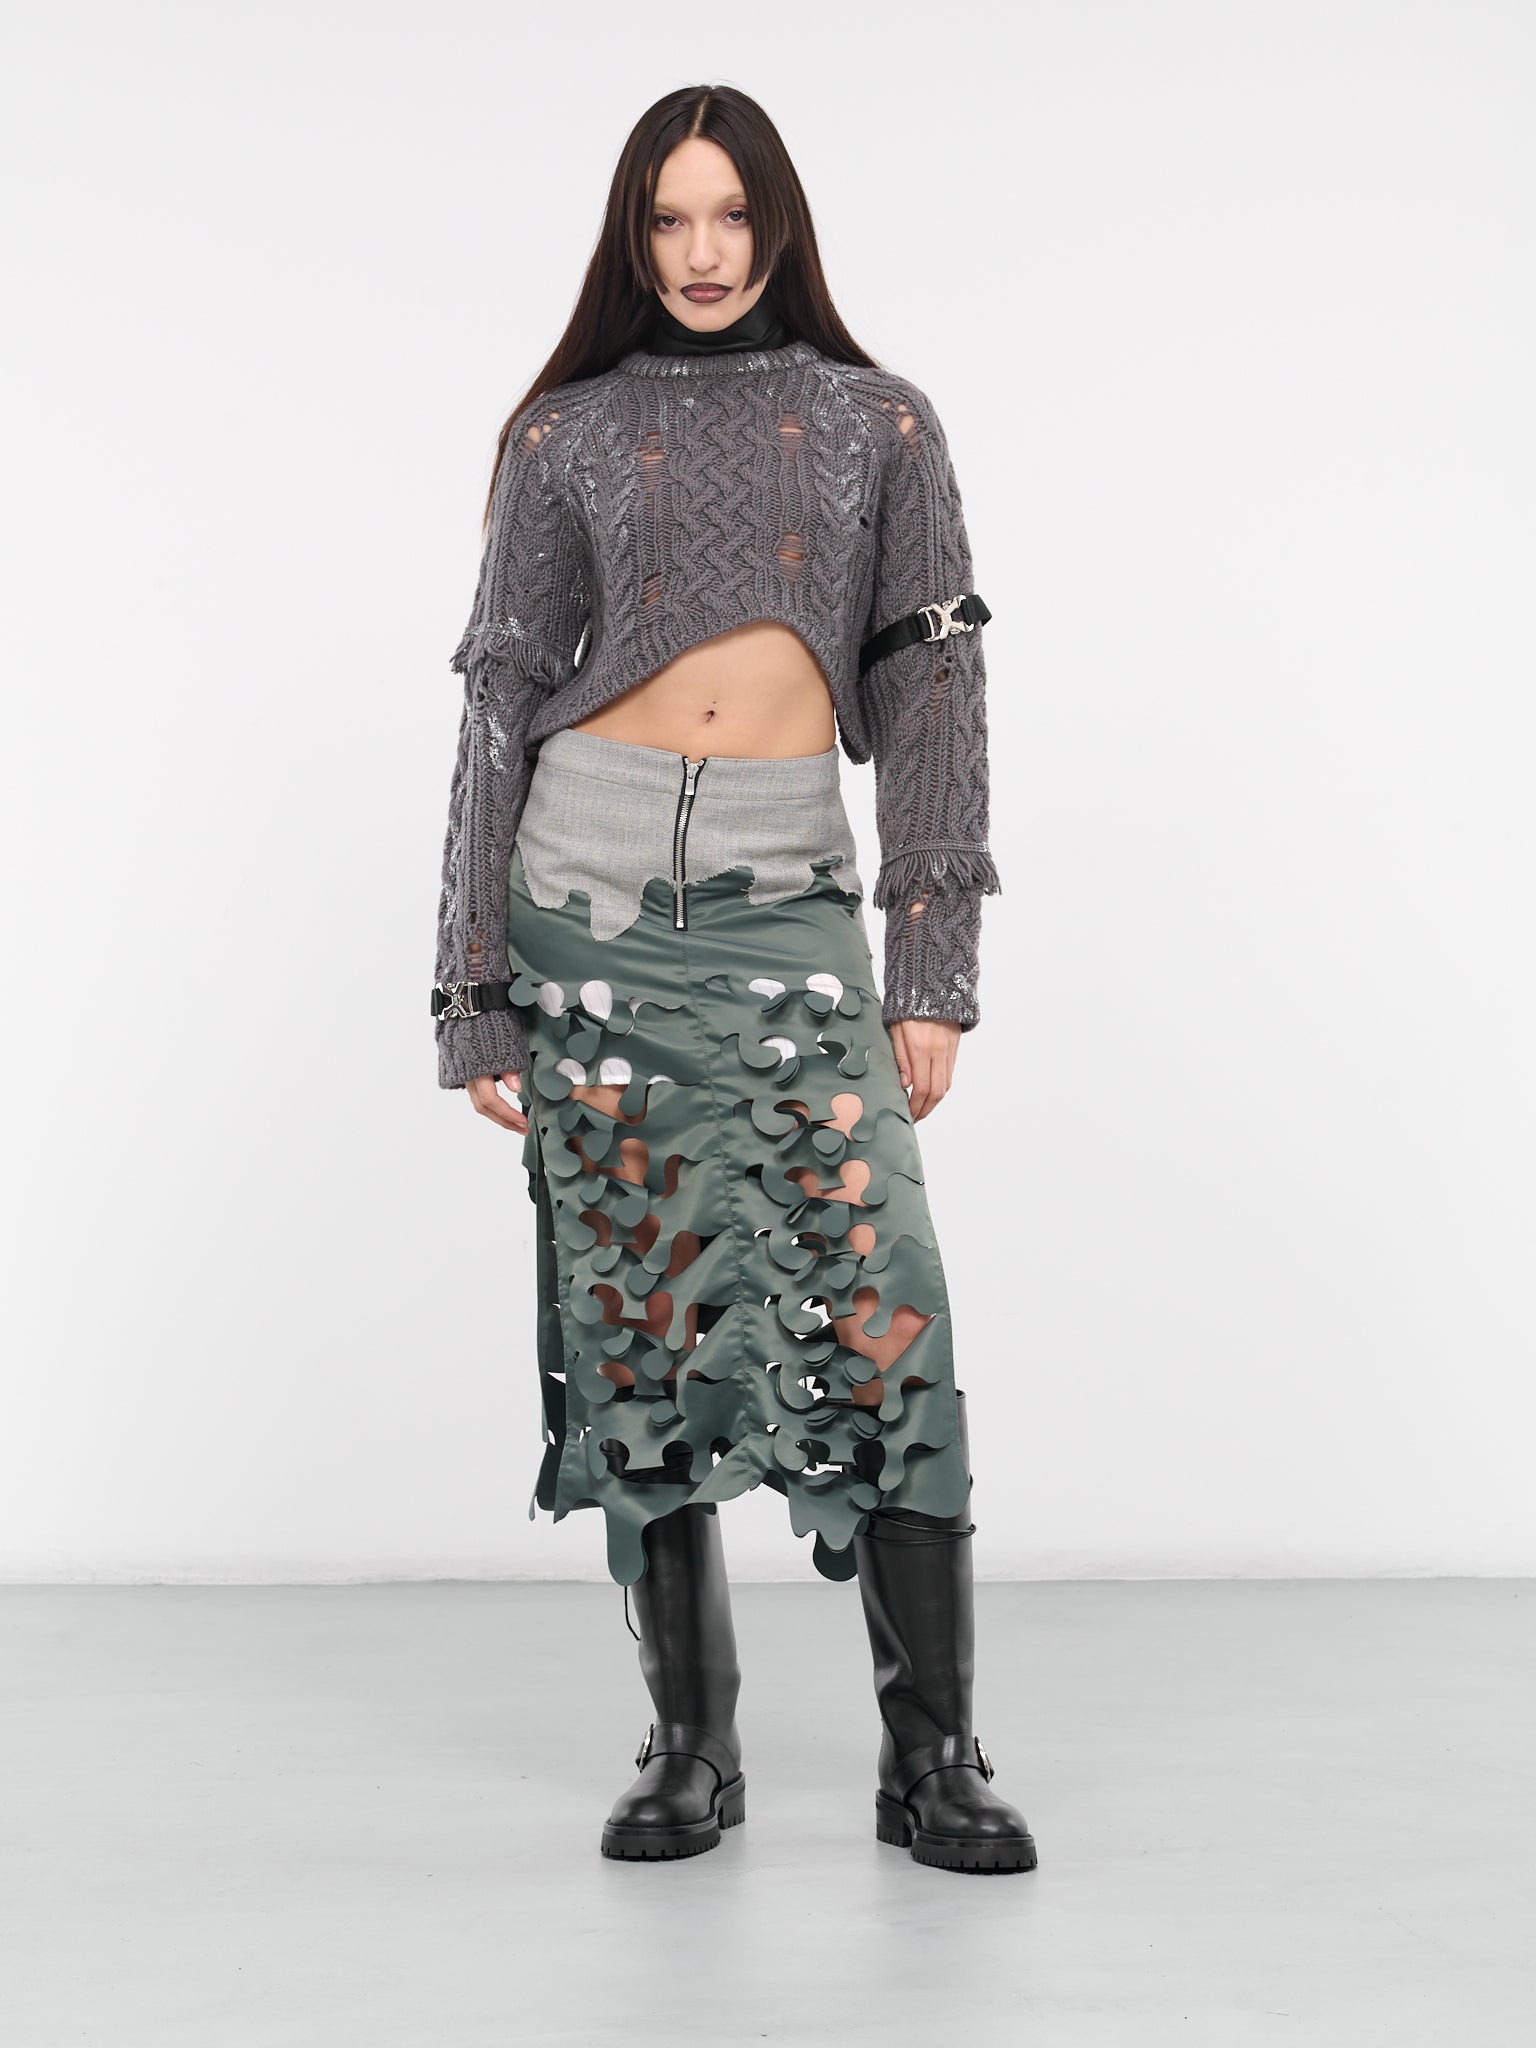 Sara Crop Knit Pullover (ATB1109W-DARK-GREY)